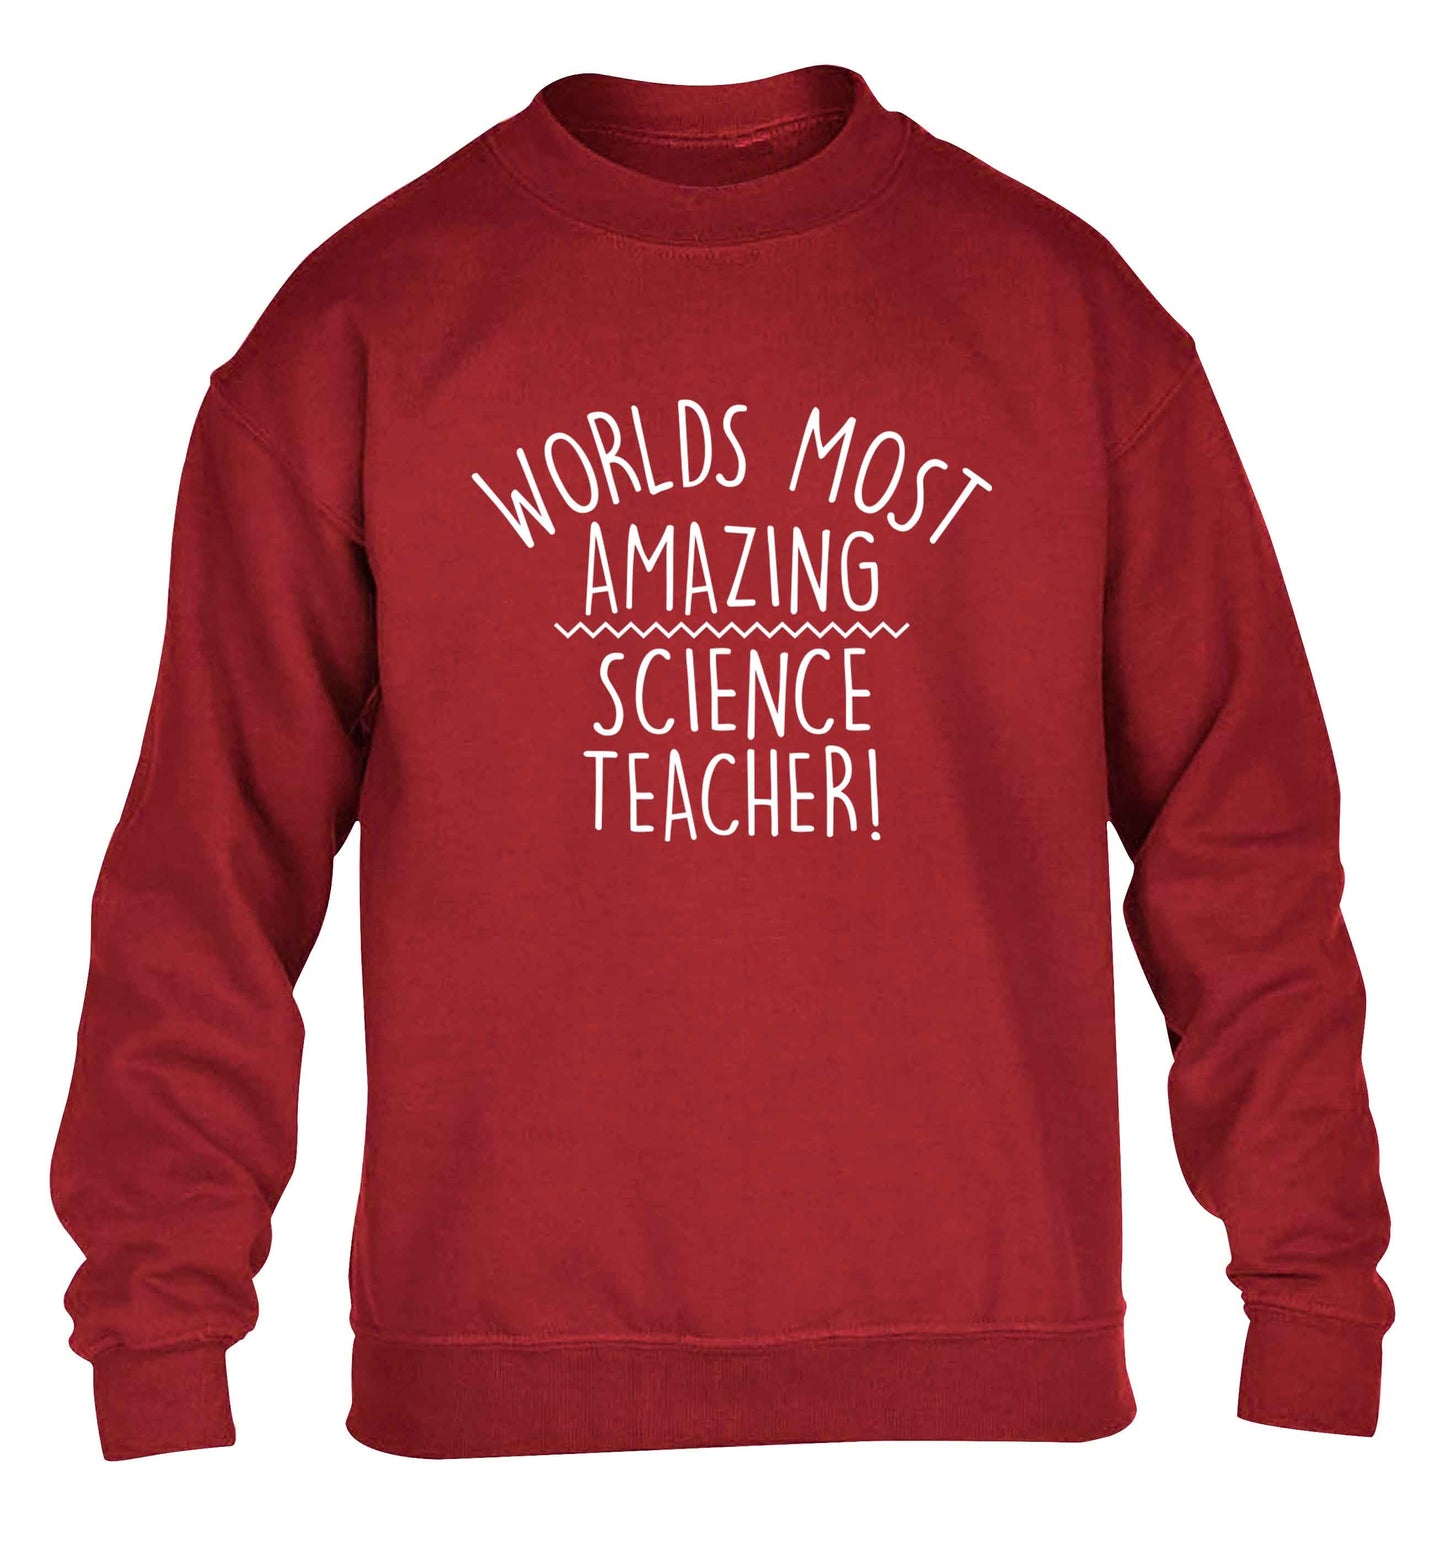 Worlds most amazing science teacher children's grey sweater 12-13 Years